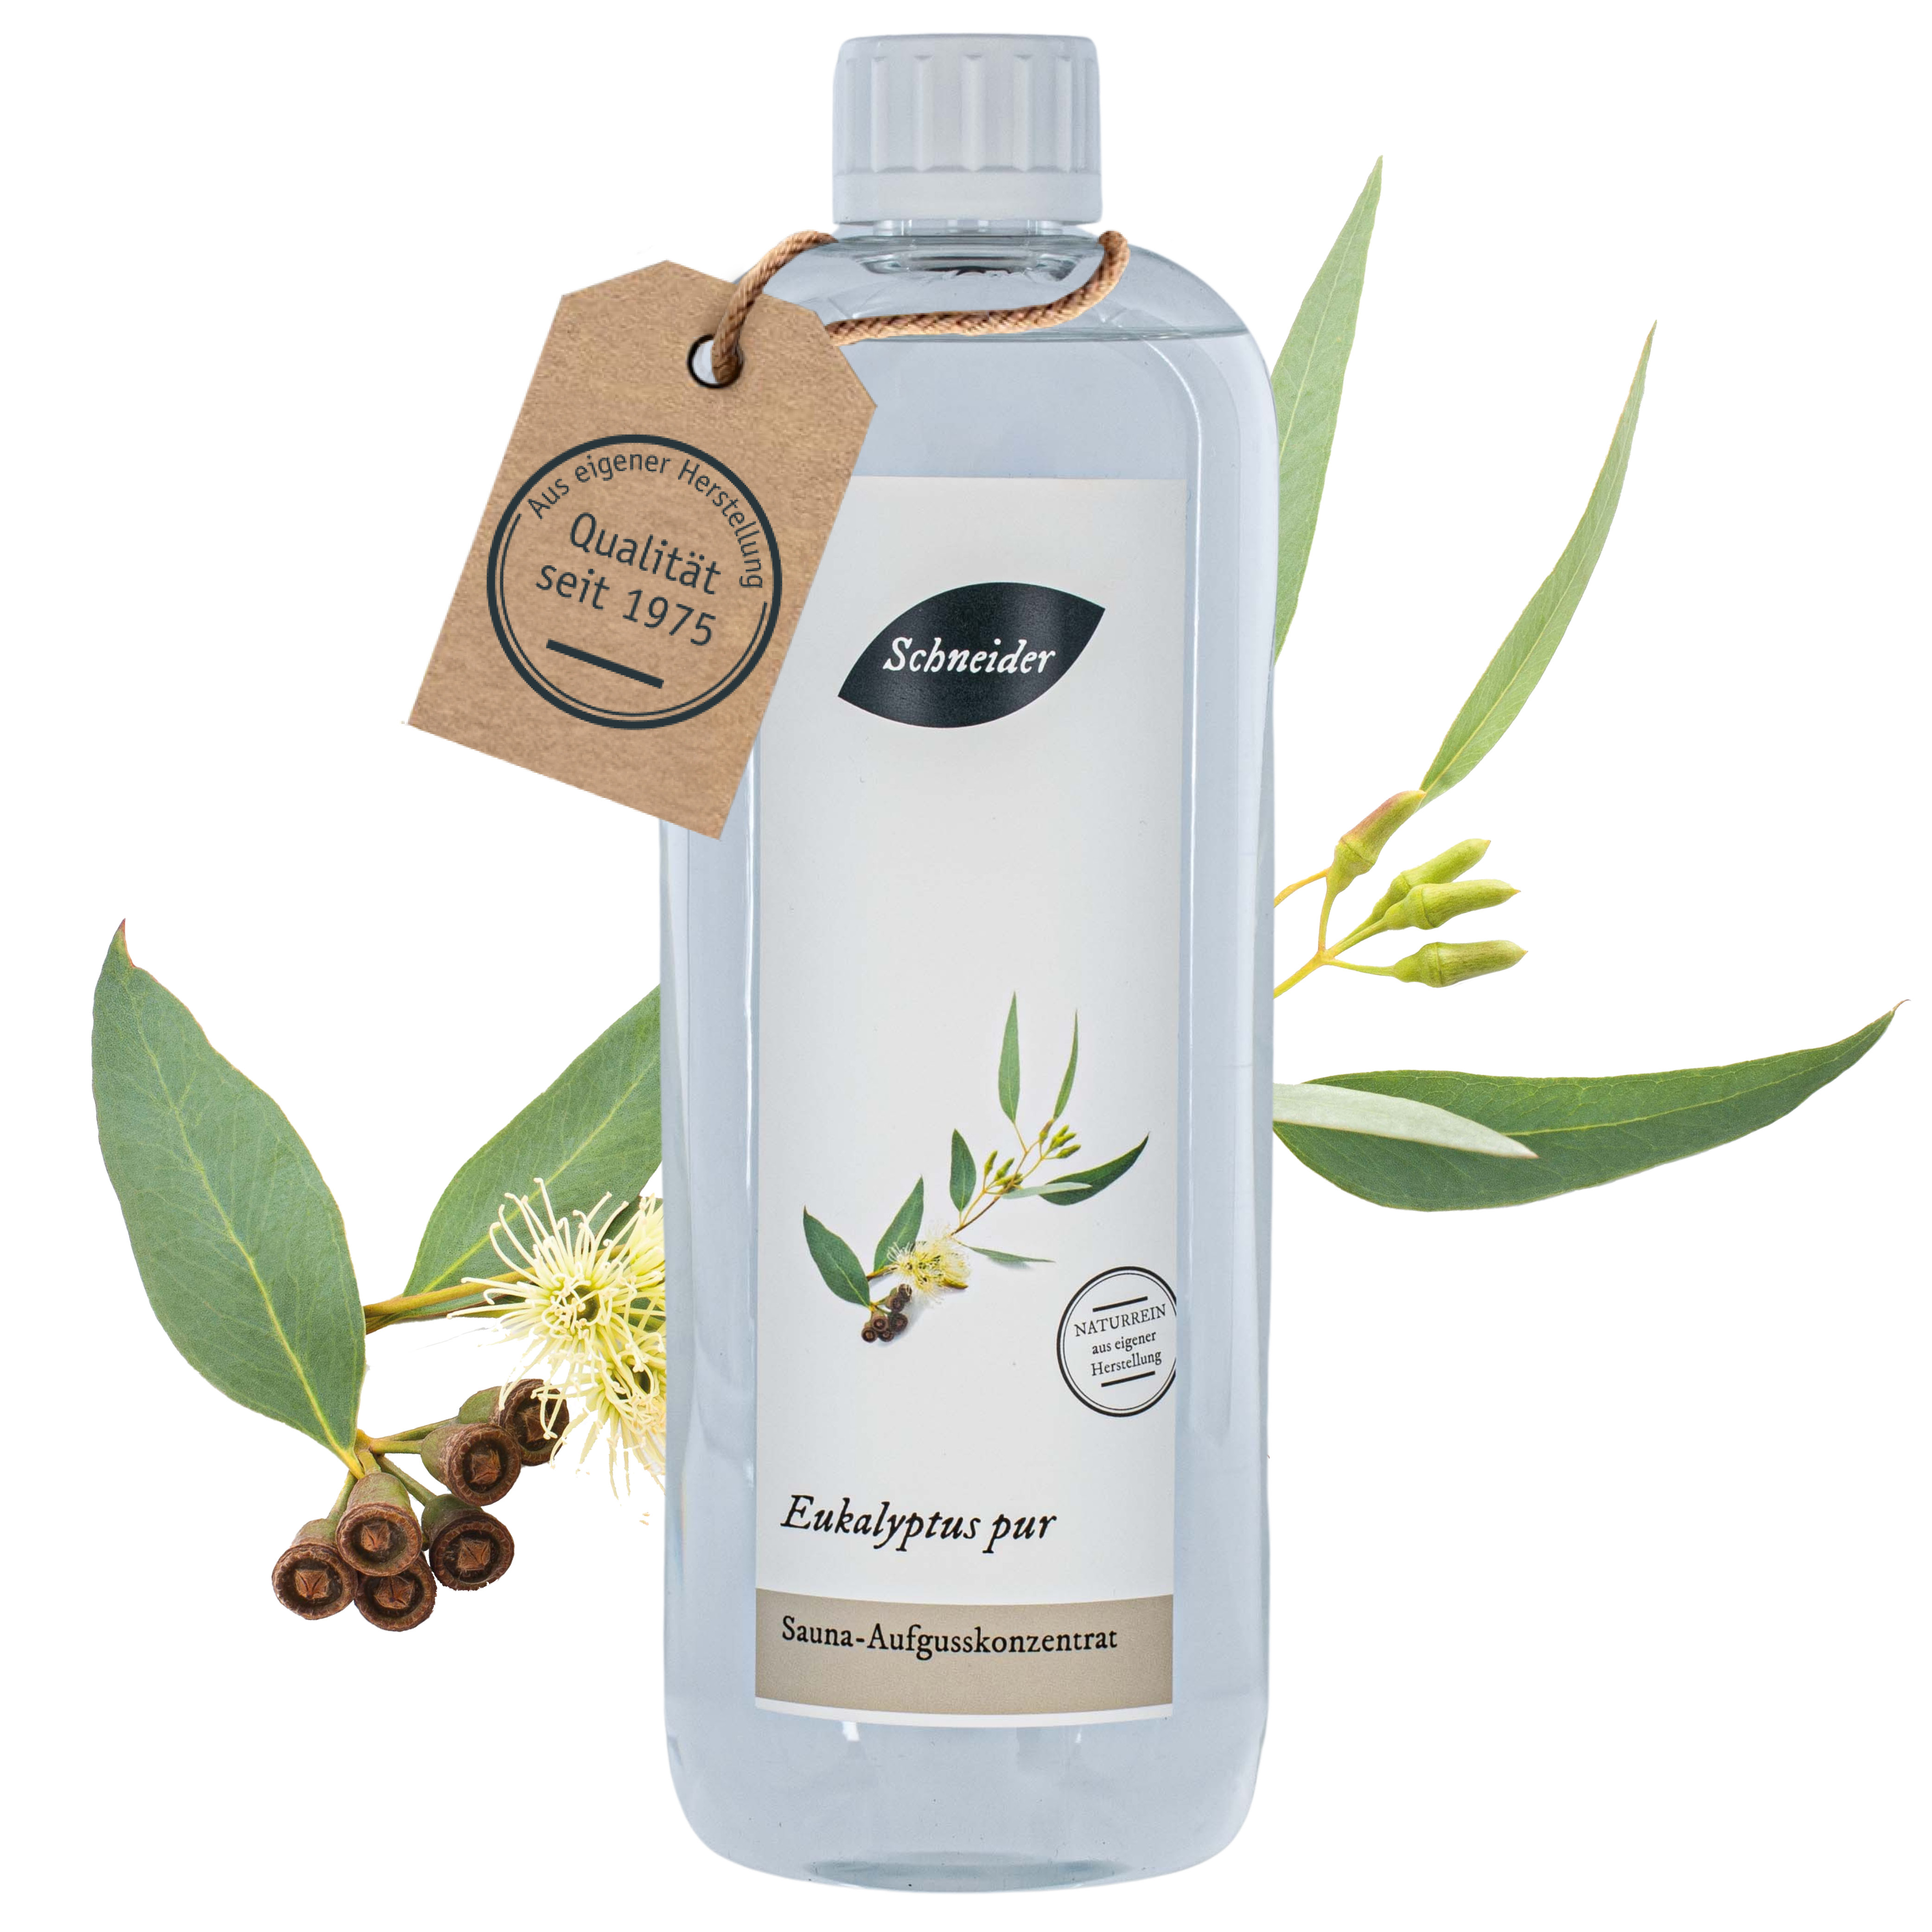 Saunaaufguss Eukalyptus pur (Aufgusskonzentrat) 250 ml